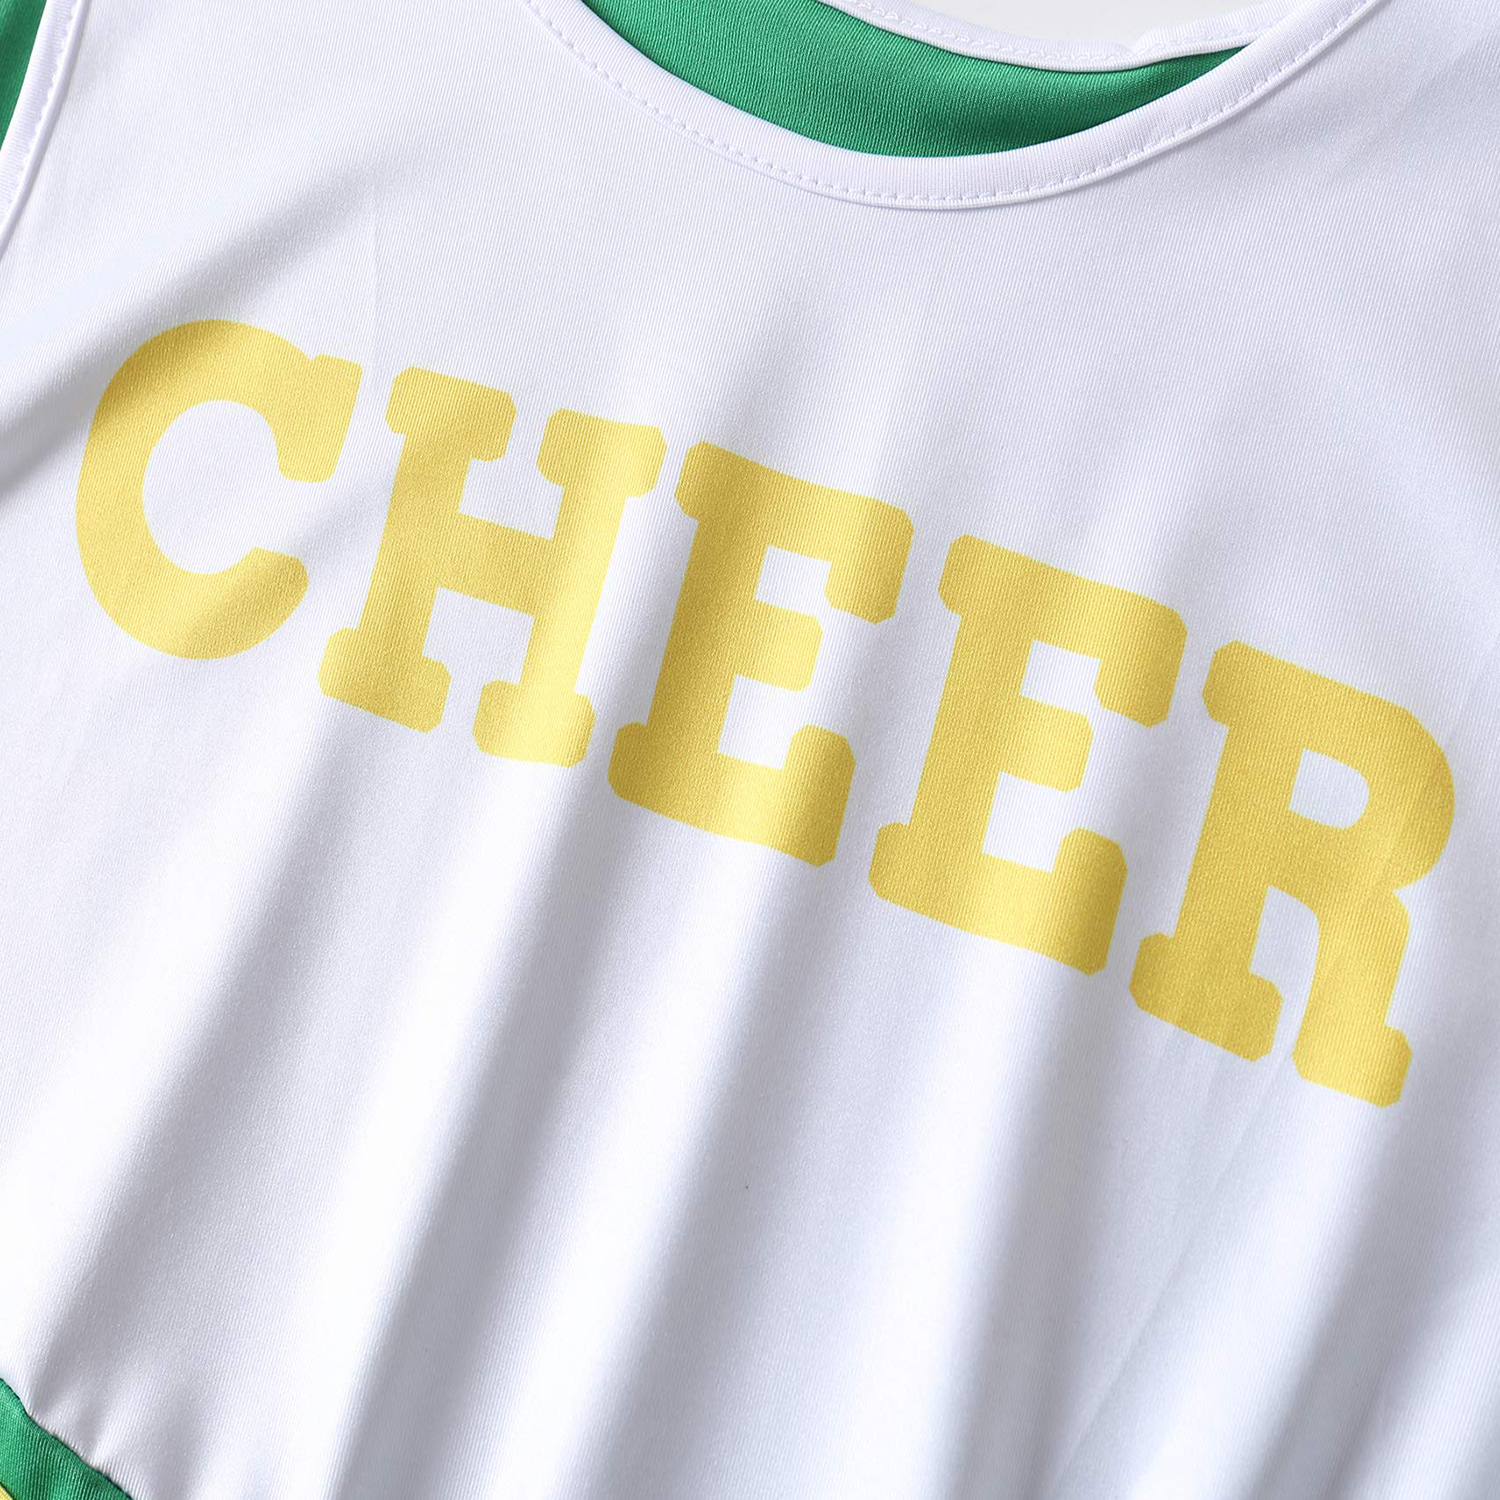 Green Cheerleader Costume Fancy Dress High School Musical Cheerleading Uniform No Pom-Pom